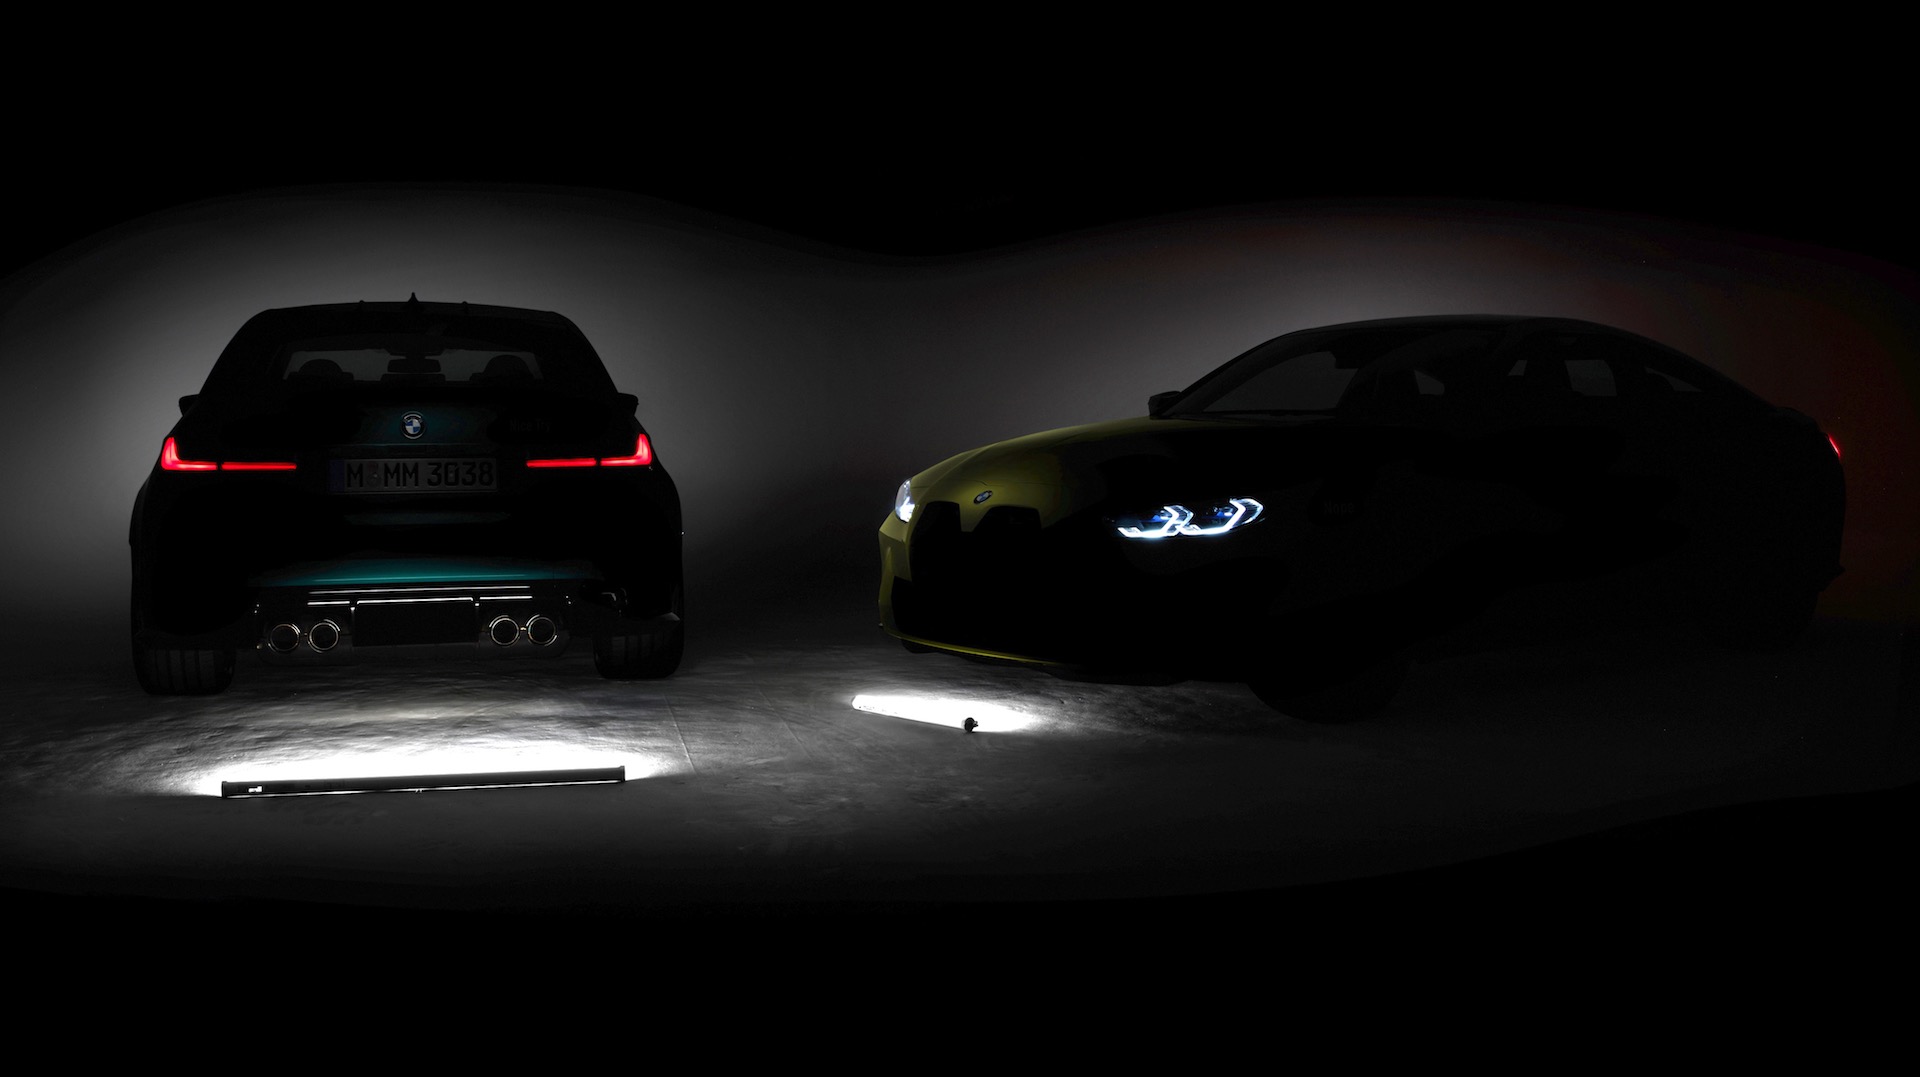 2021 BMW M3 / M4 debut in September, 375kW/650Nm confirmed